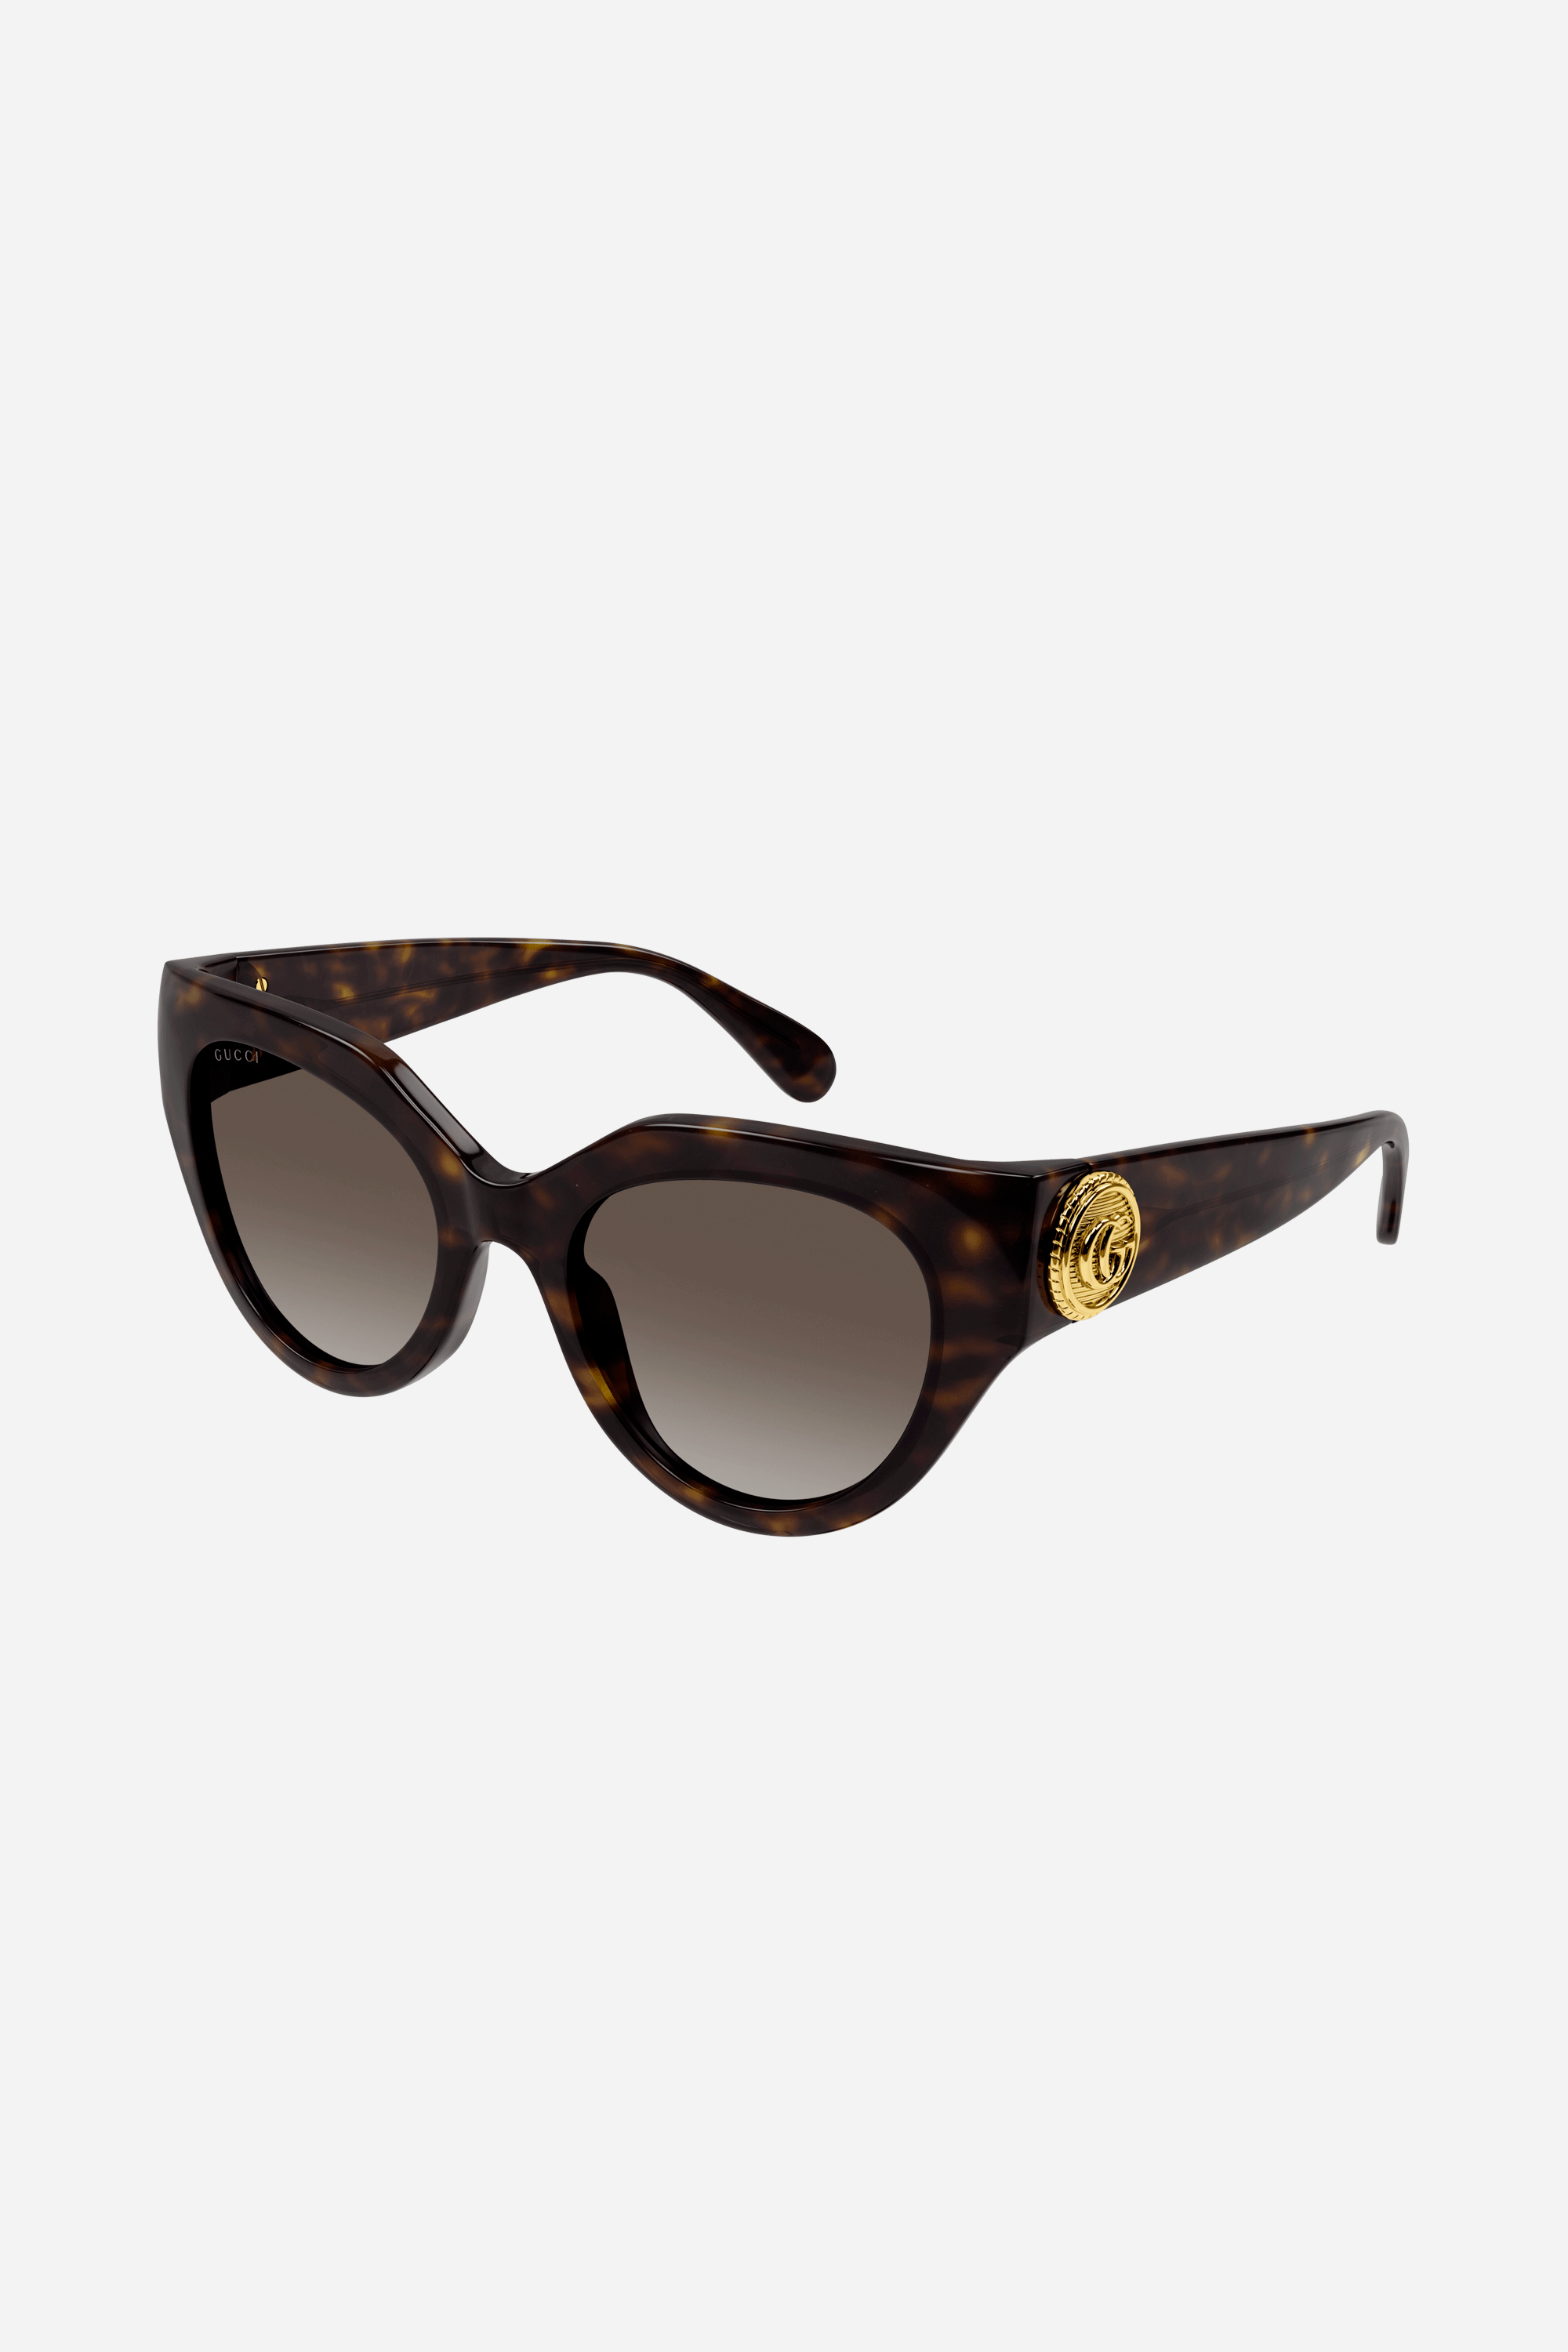 Gucci cat eye dark havana sunglasses - Eyewear Club